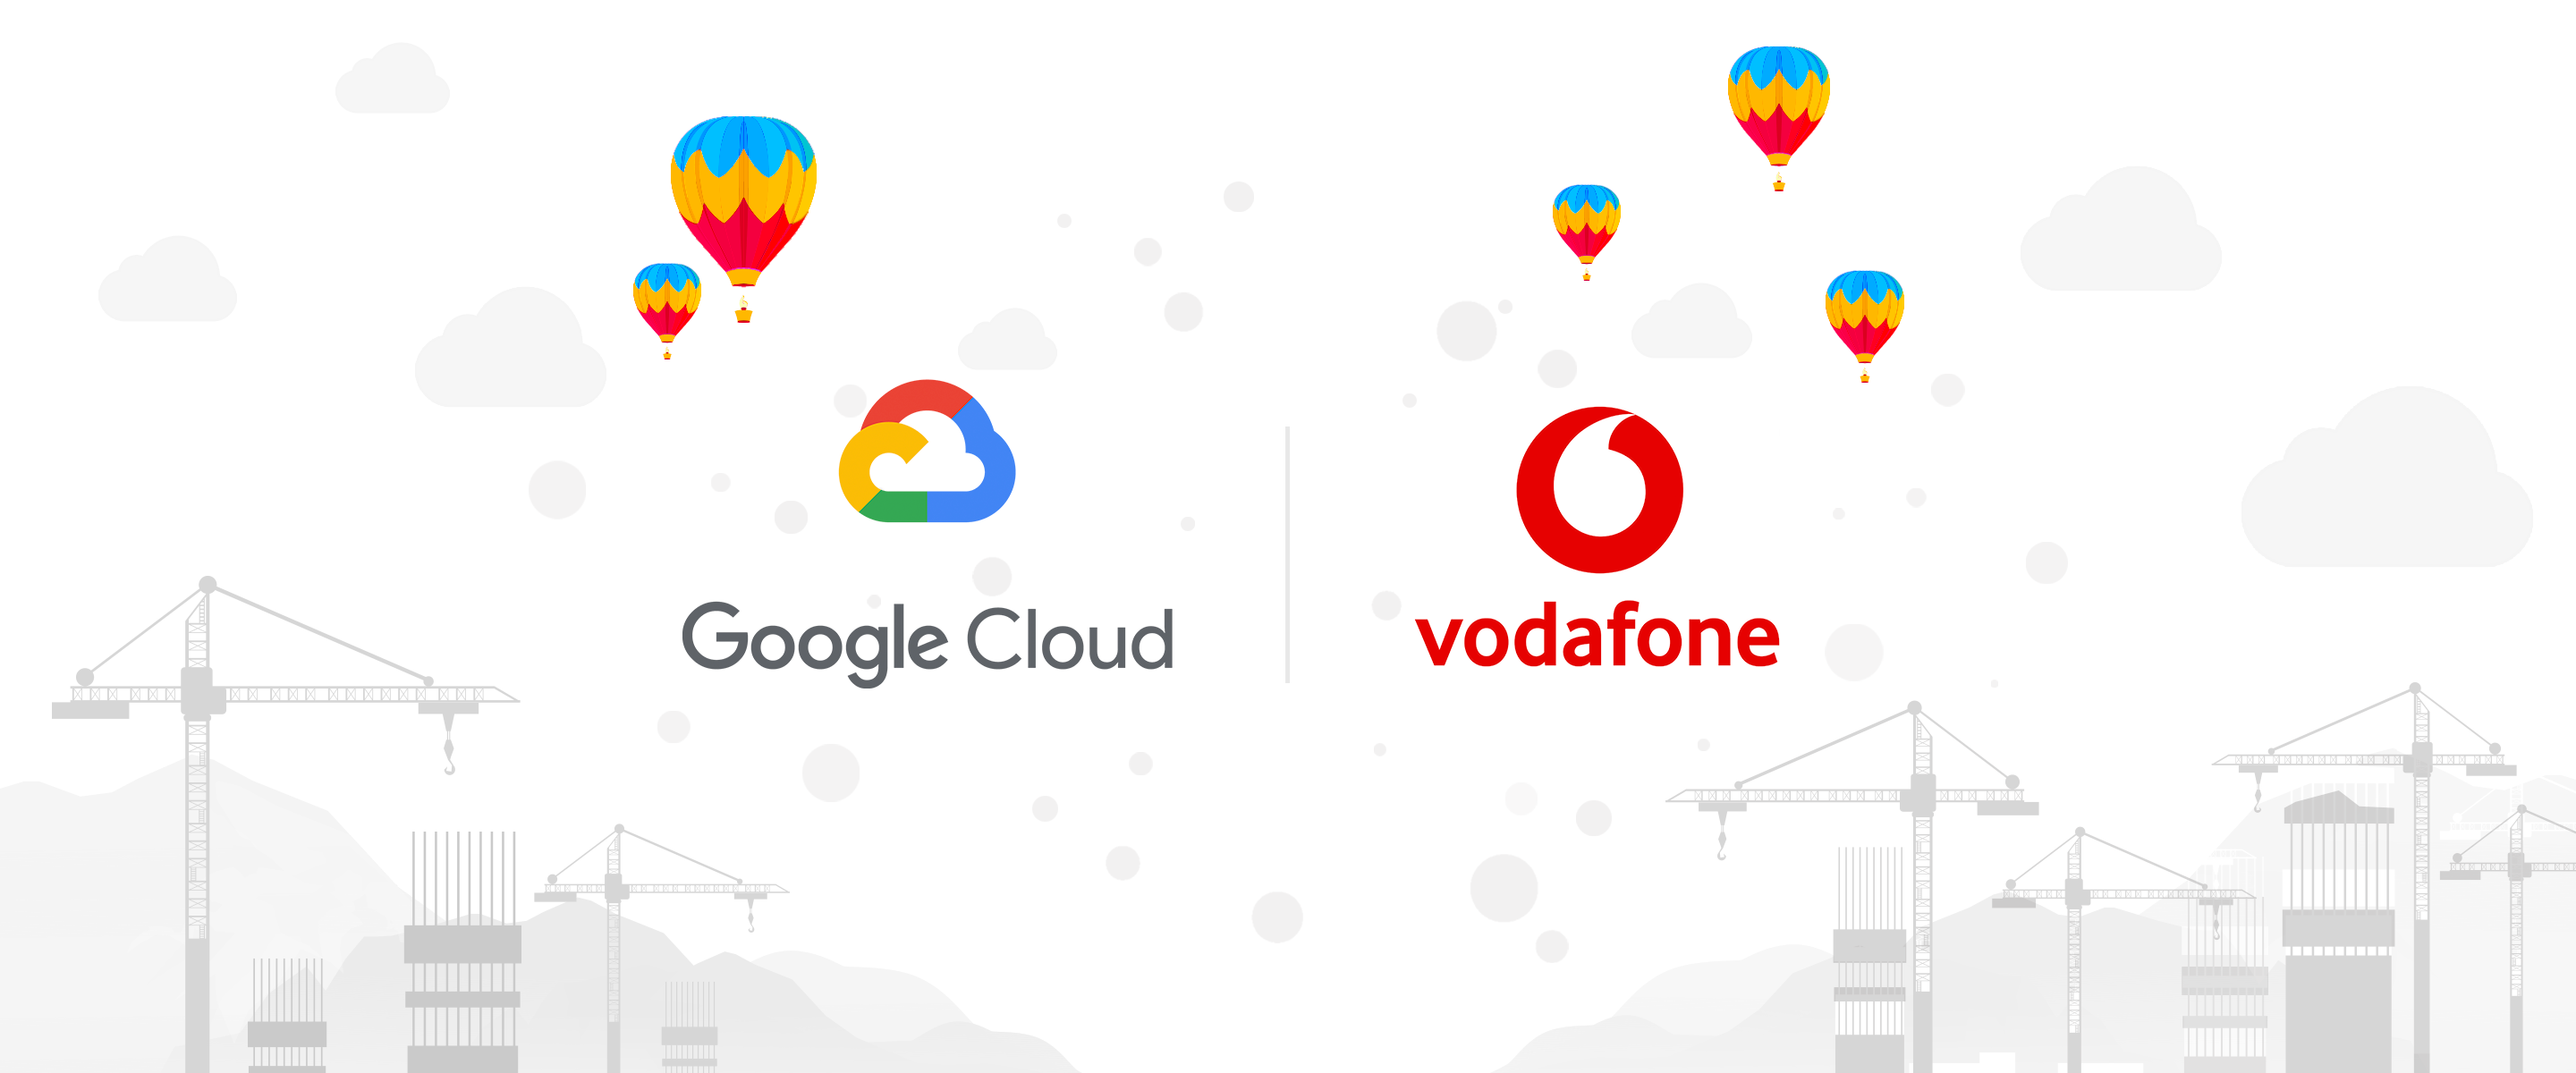 https://storage.googleapis.com/gweb-cloudblog-publish/original_images/Google_Cloud_x_Vodafone.png